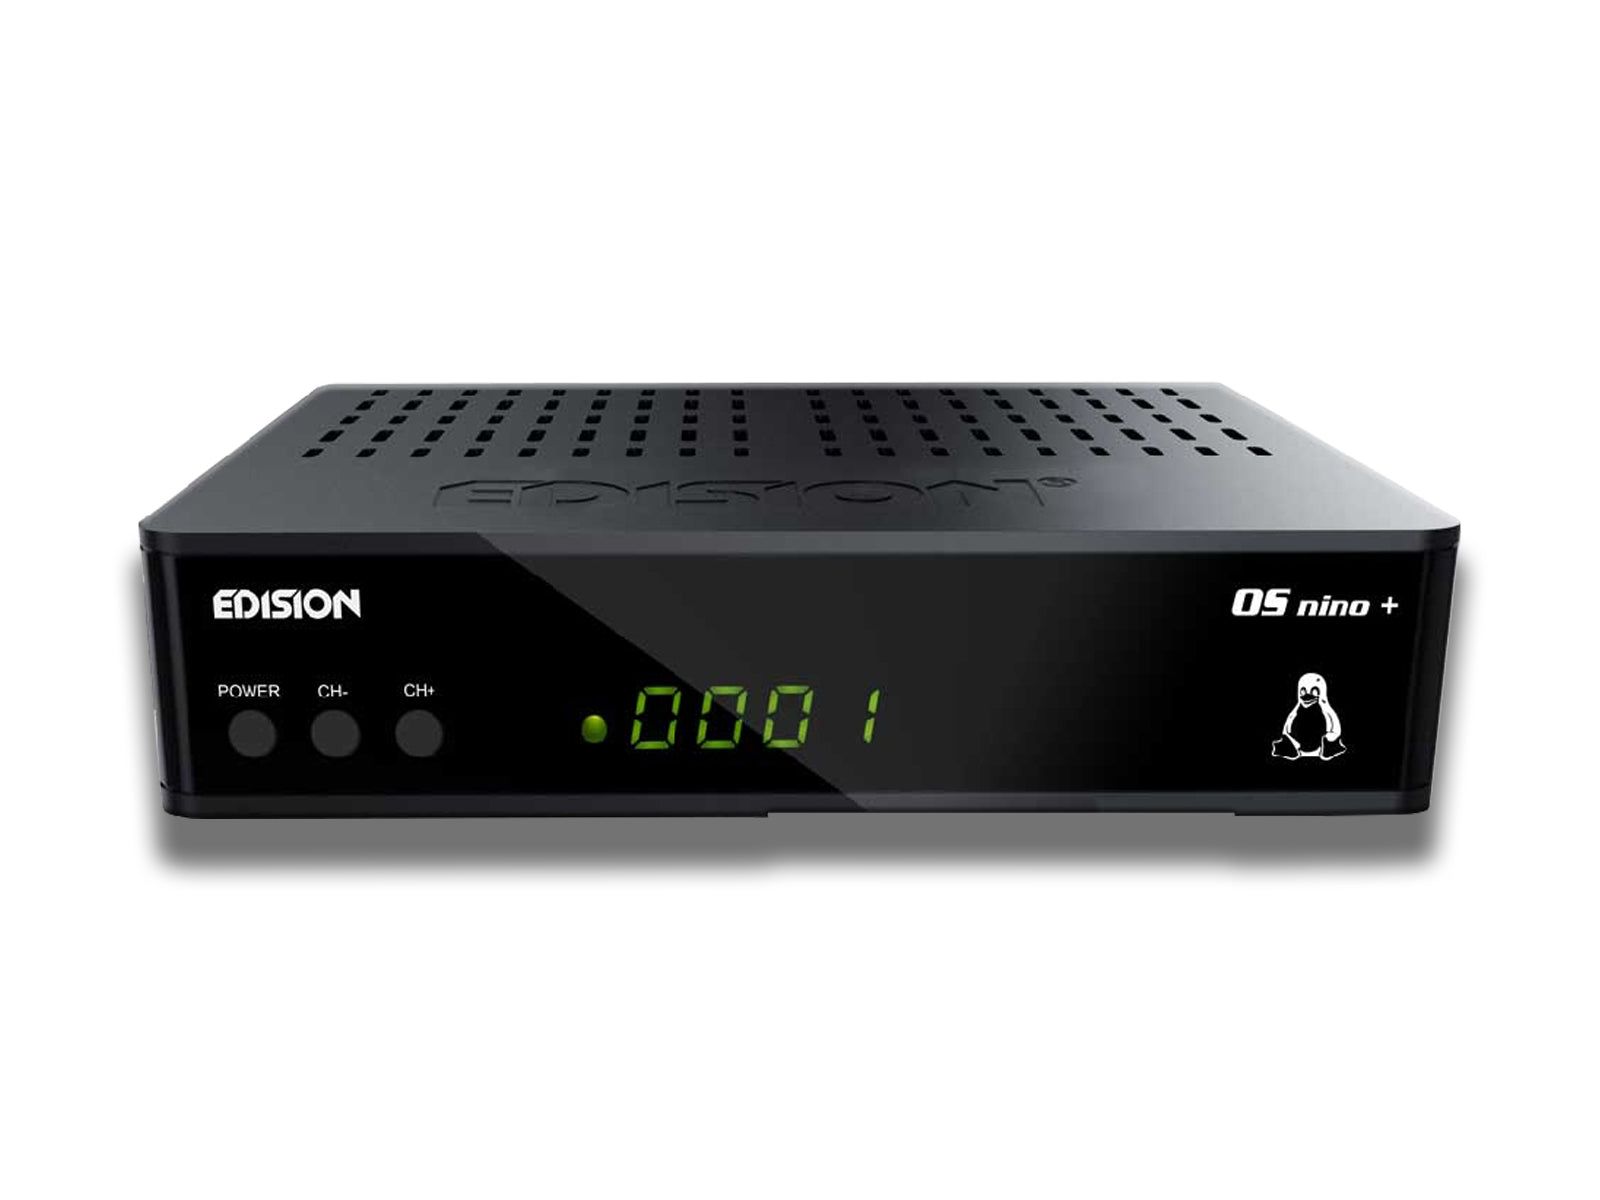 EDISION PICCO T265+ Digital Terrestrial & Cable Receiver DVB-T2/C  H.265/HEVC (EN) 